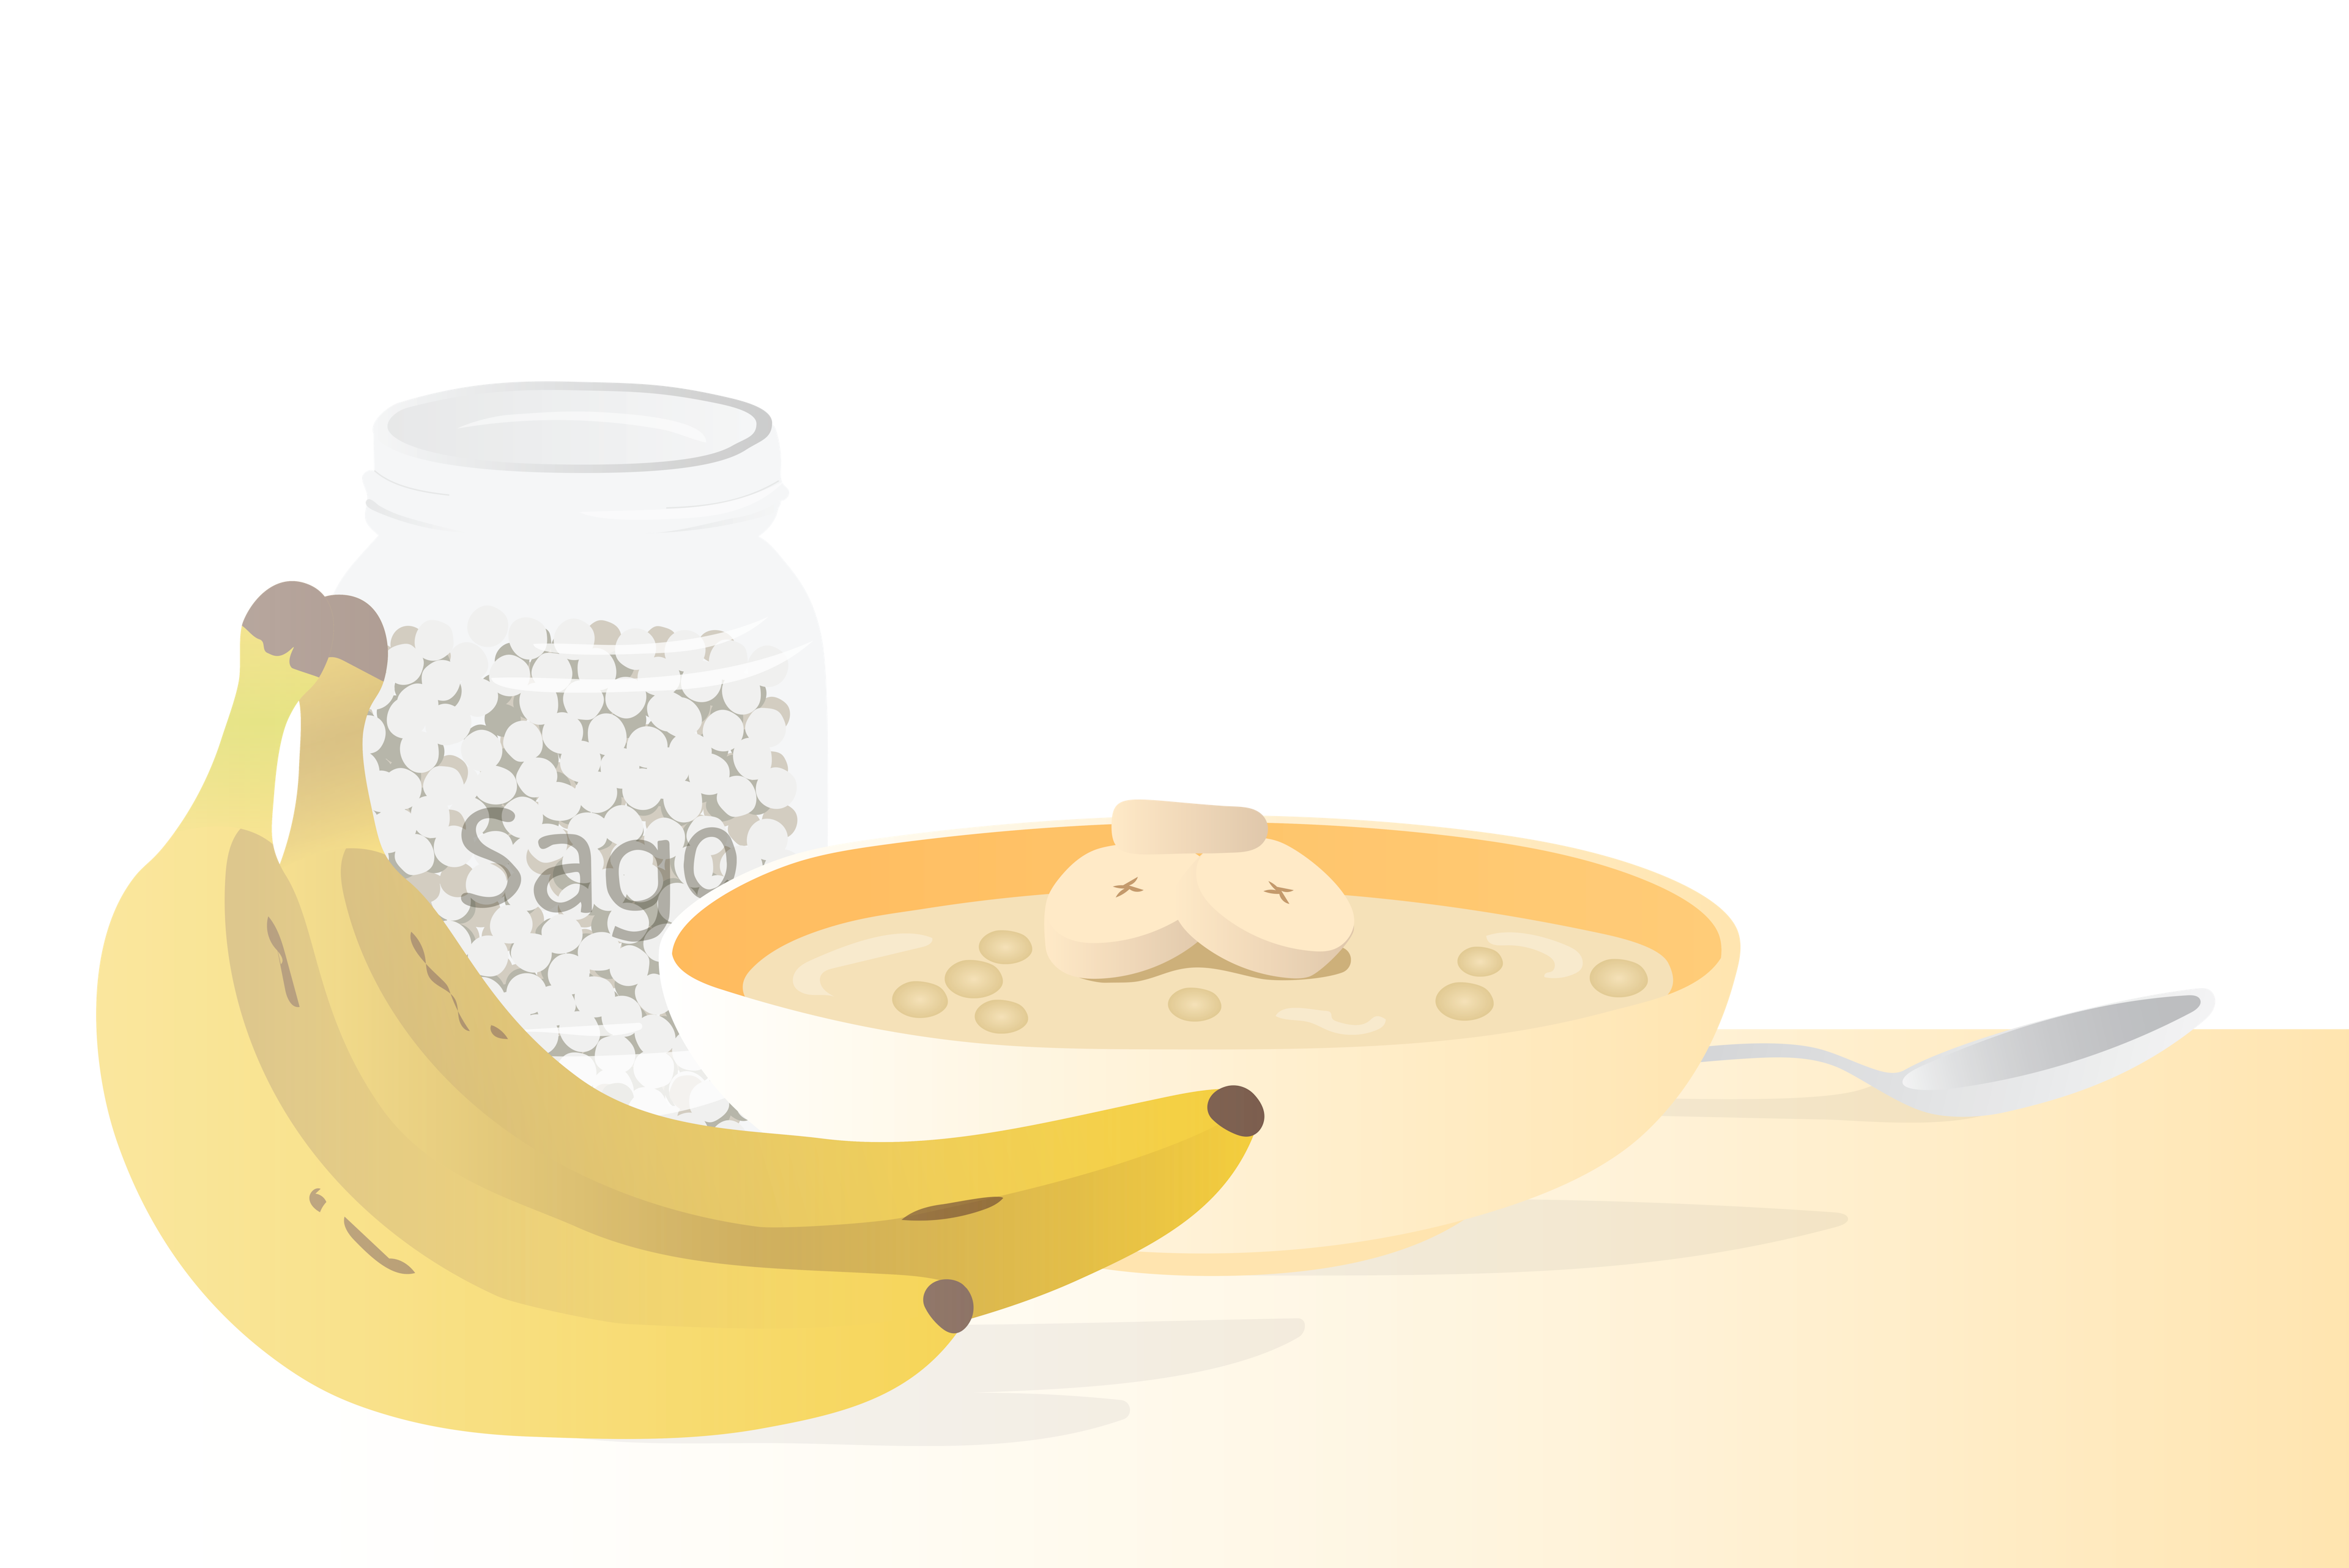 Banana Sago pudding breakfast recipe illustration